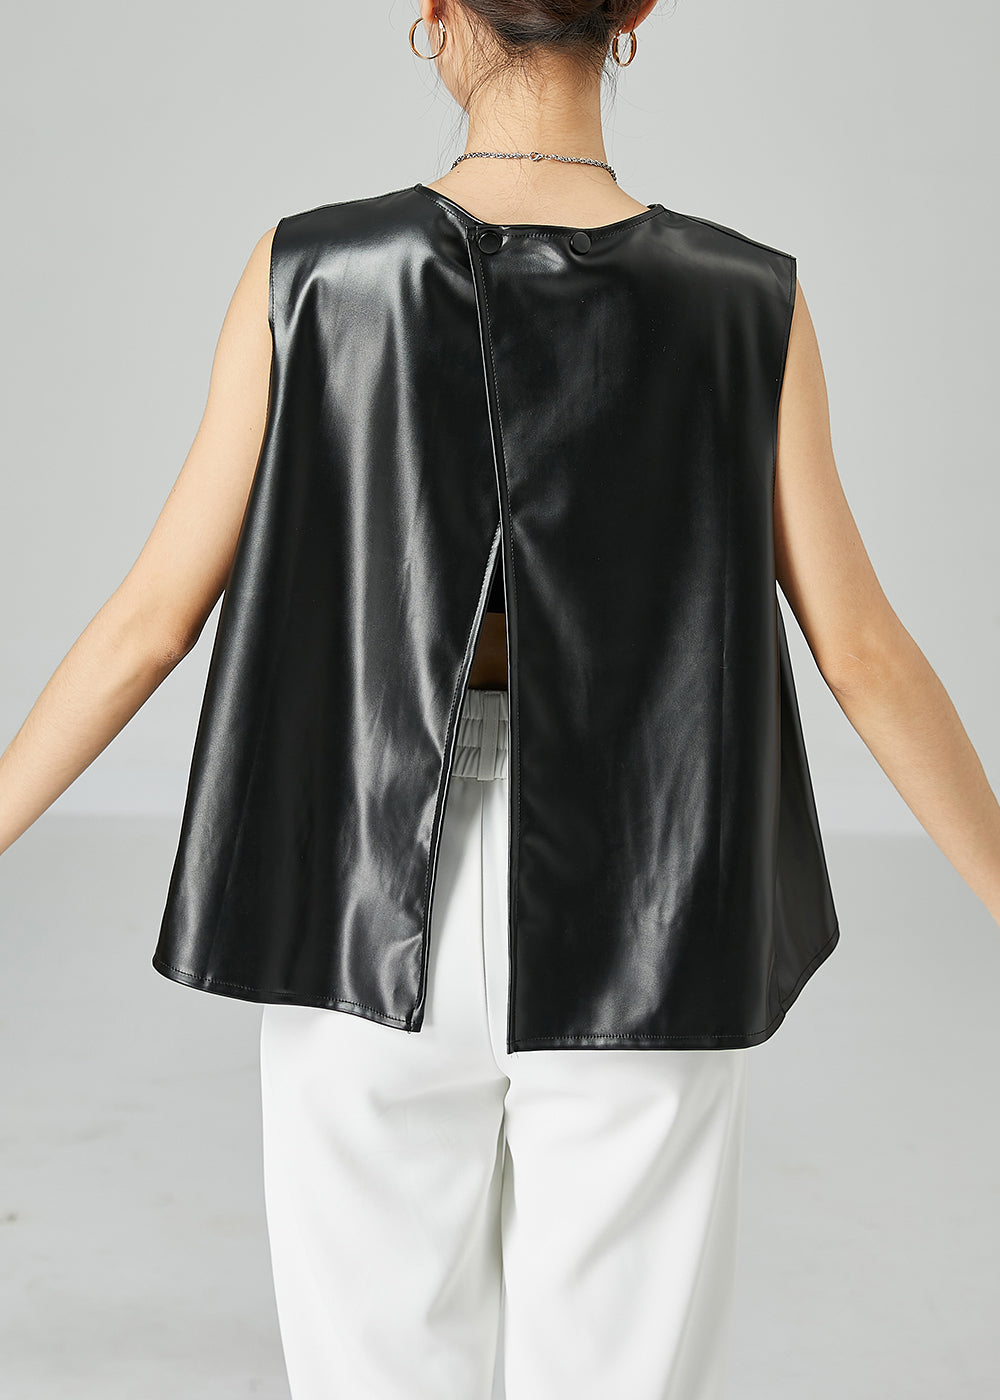 Art Black Oversized Cinched Side Open Sheepskin Vests Sleeveless LY2430